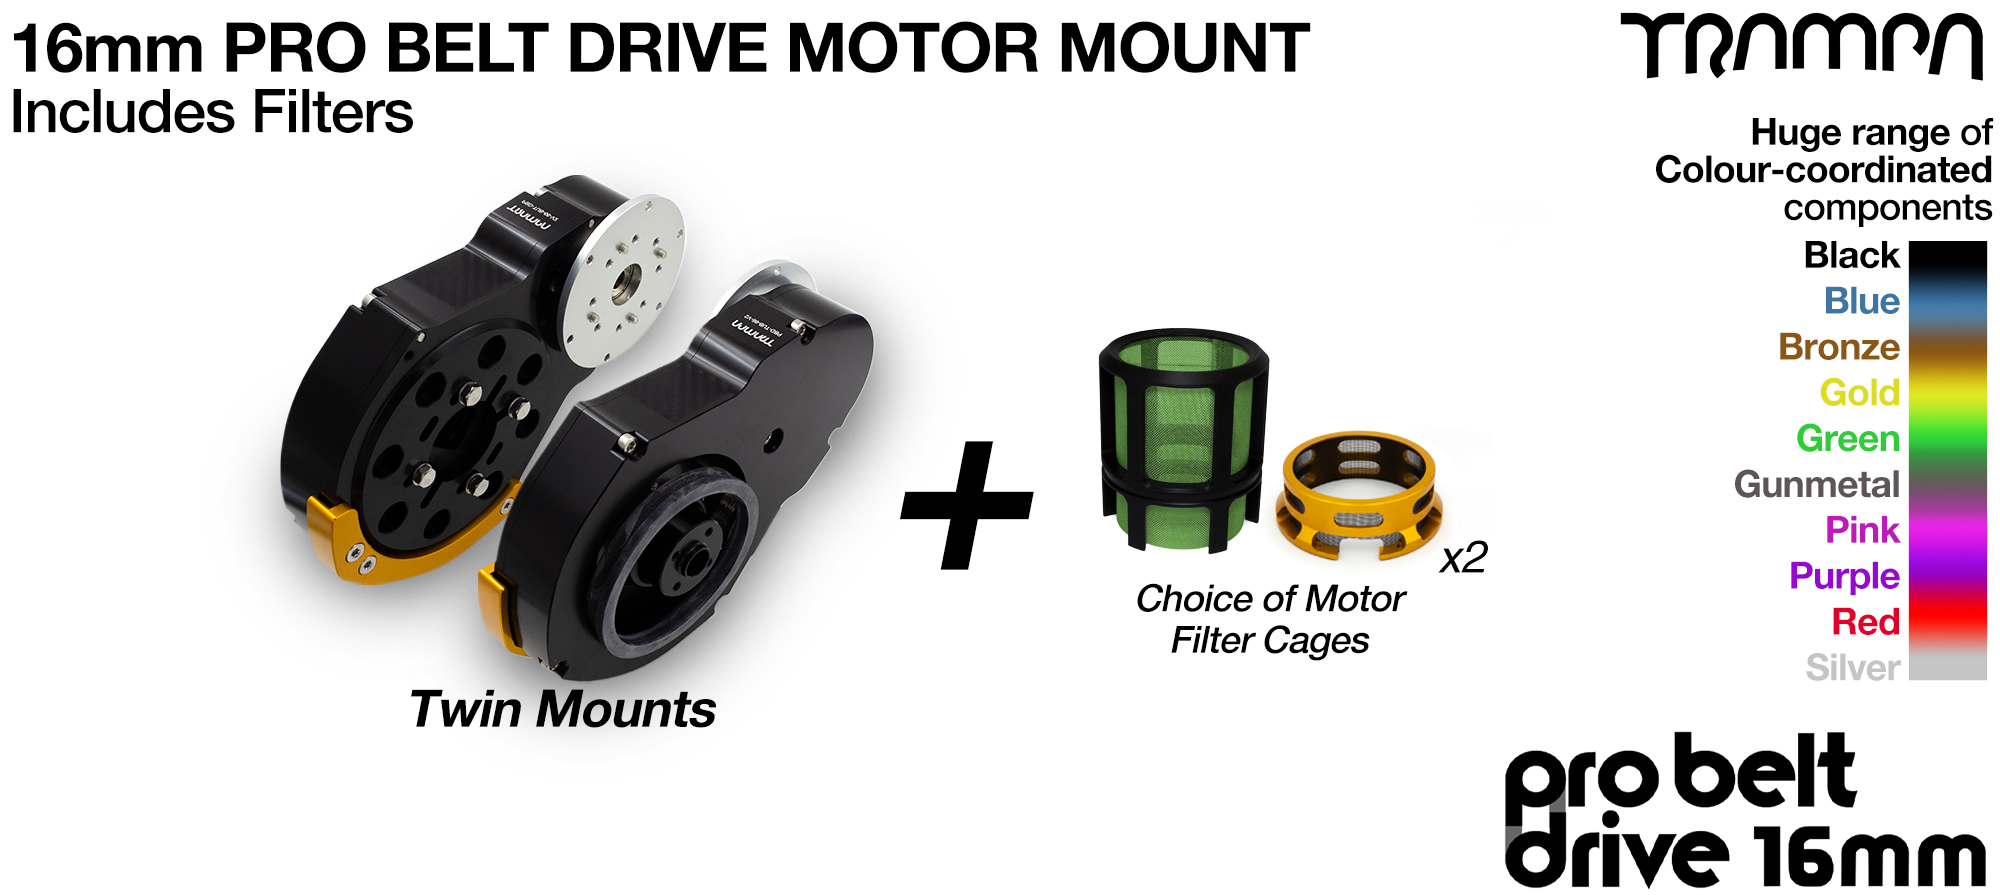 16mm PRO BELT DRIVE Motor Mounts with FILTERS - NO Pulleys & NO Motors